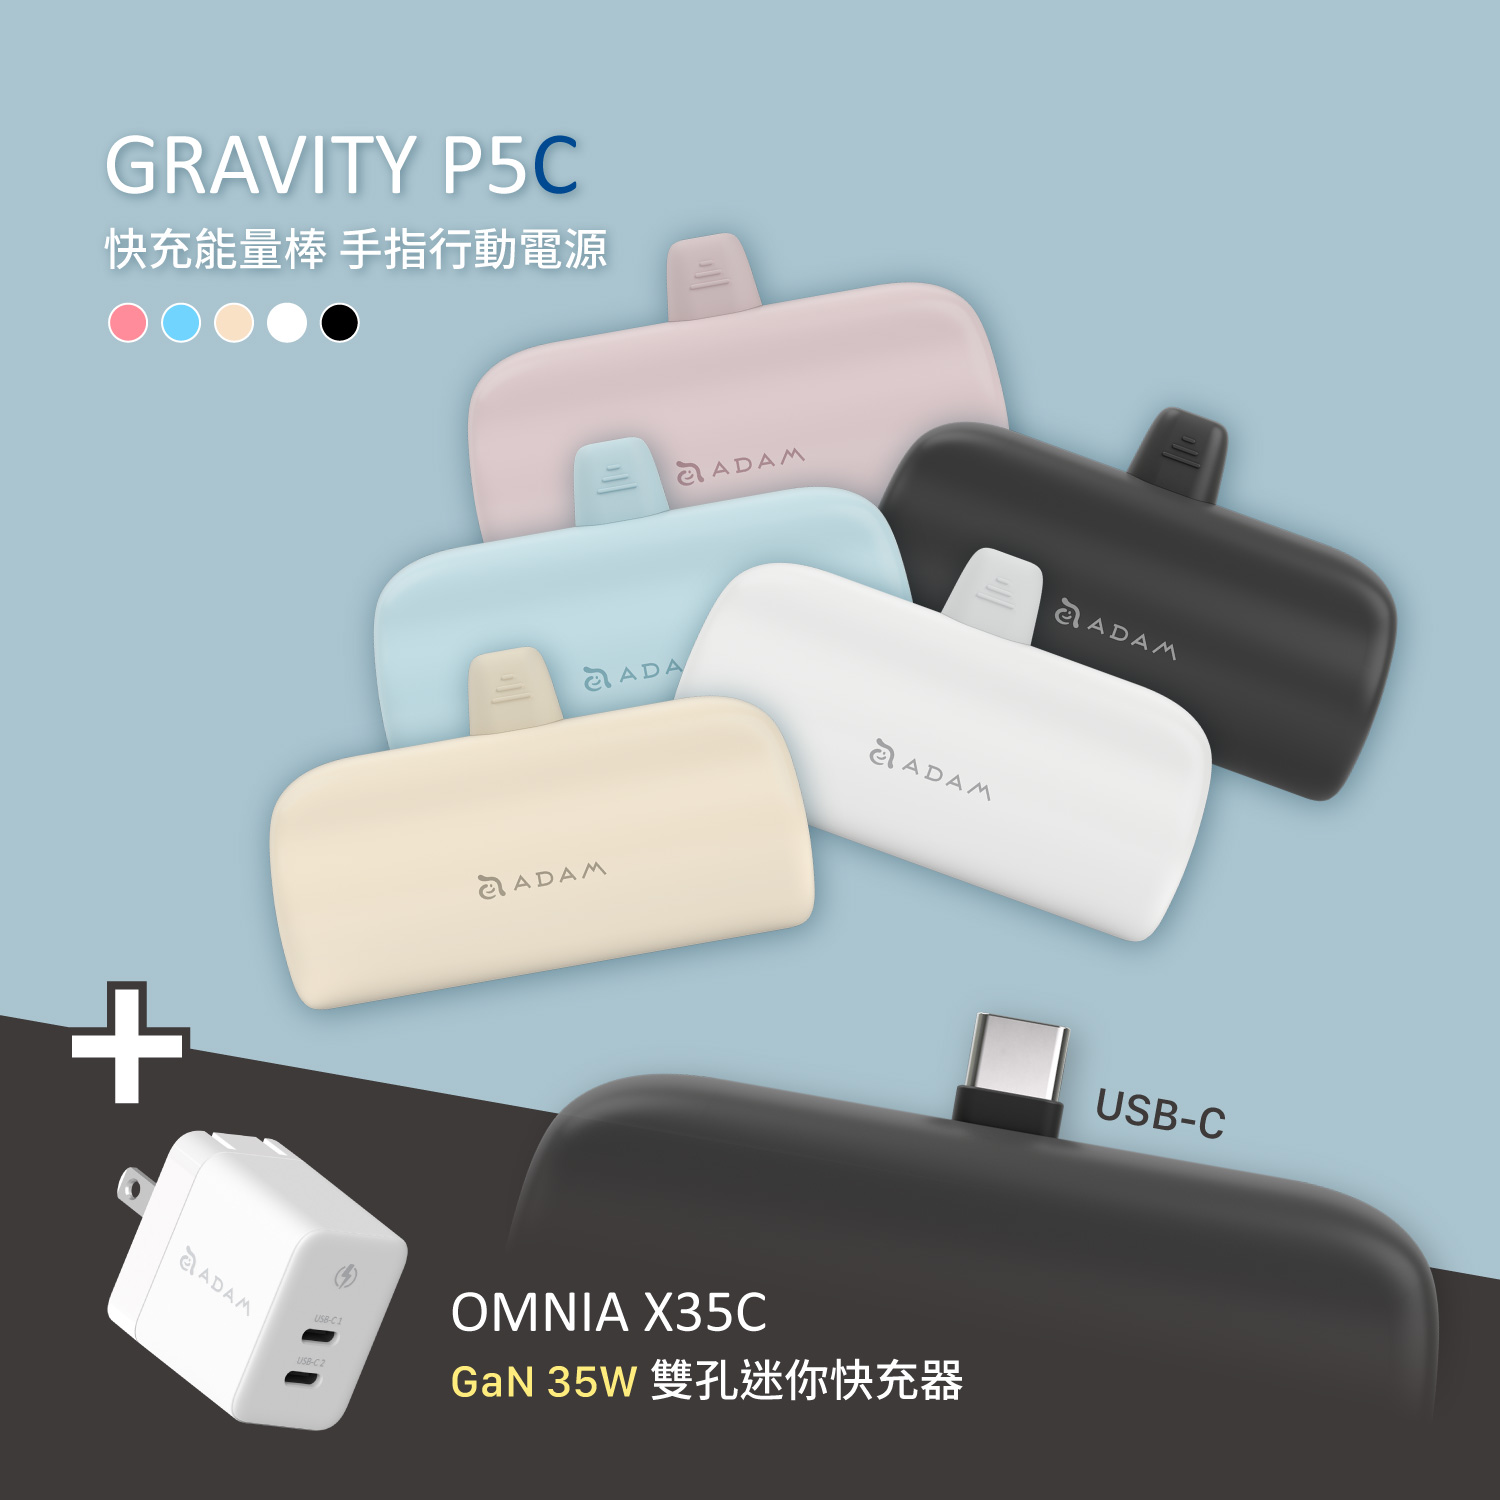 GRAVITY P5C USB-C 口袋型行動電源_GaN 35W OMNIA X35C 雙孔分流迷你快充器